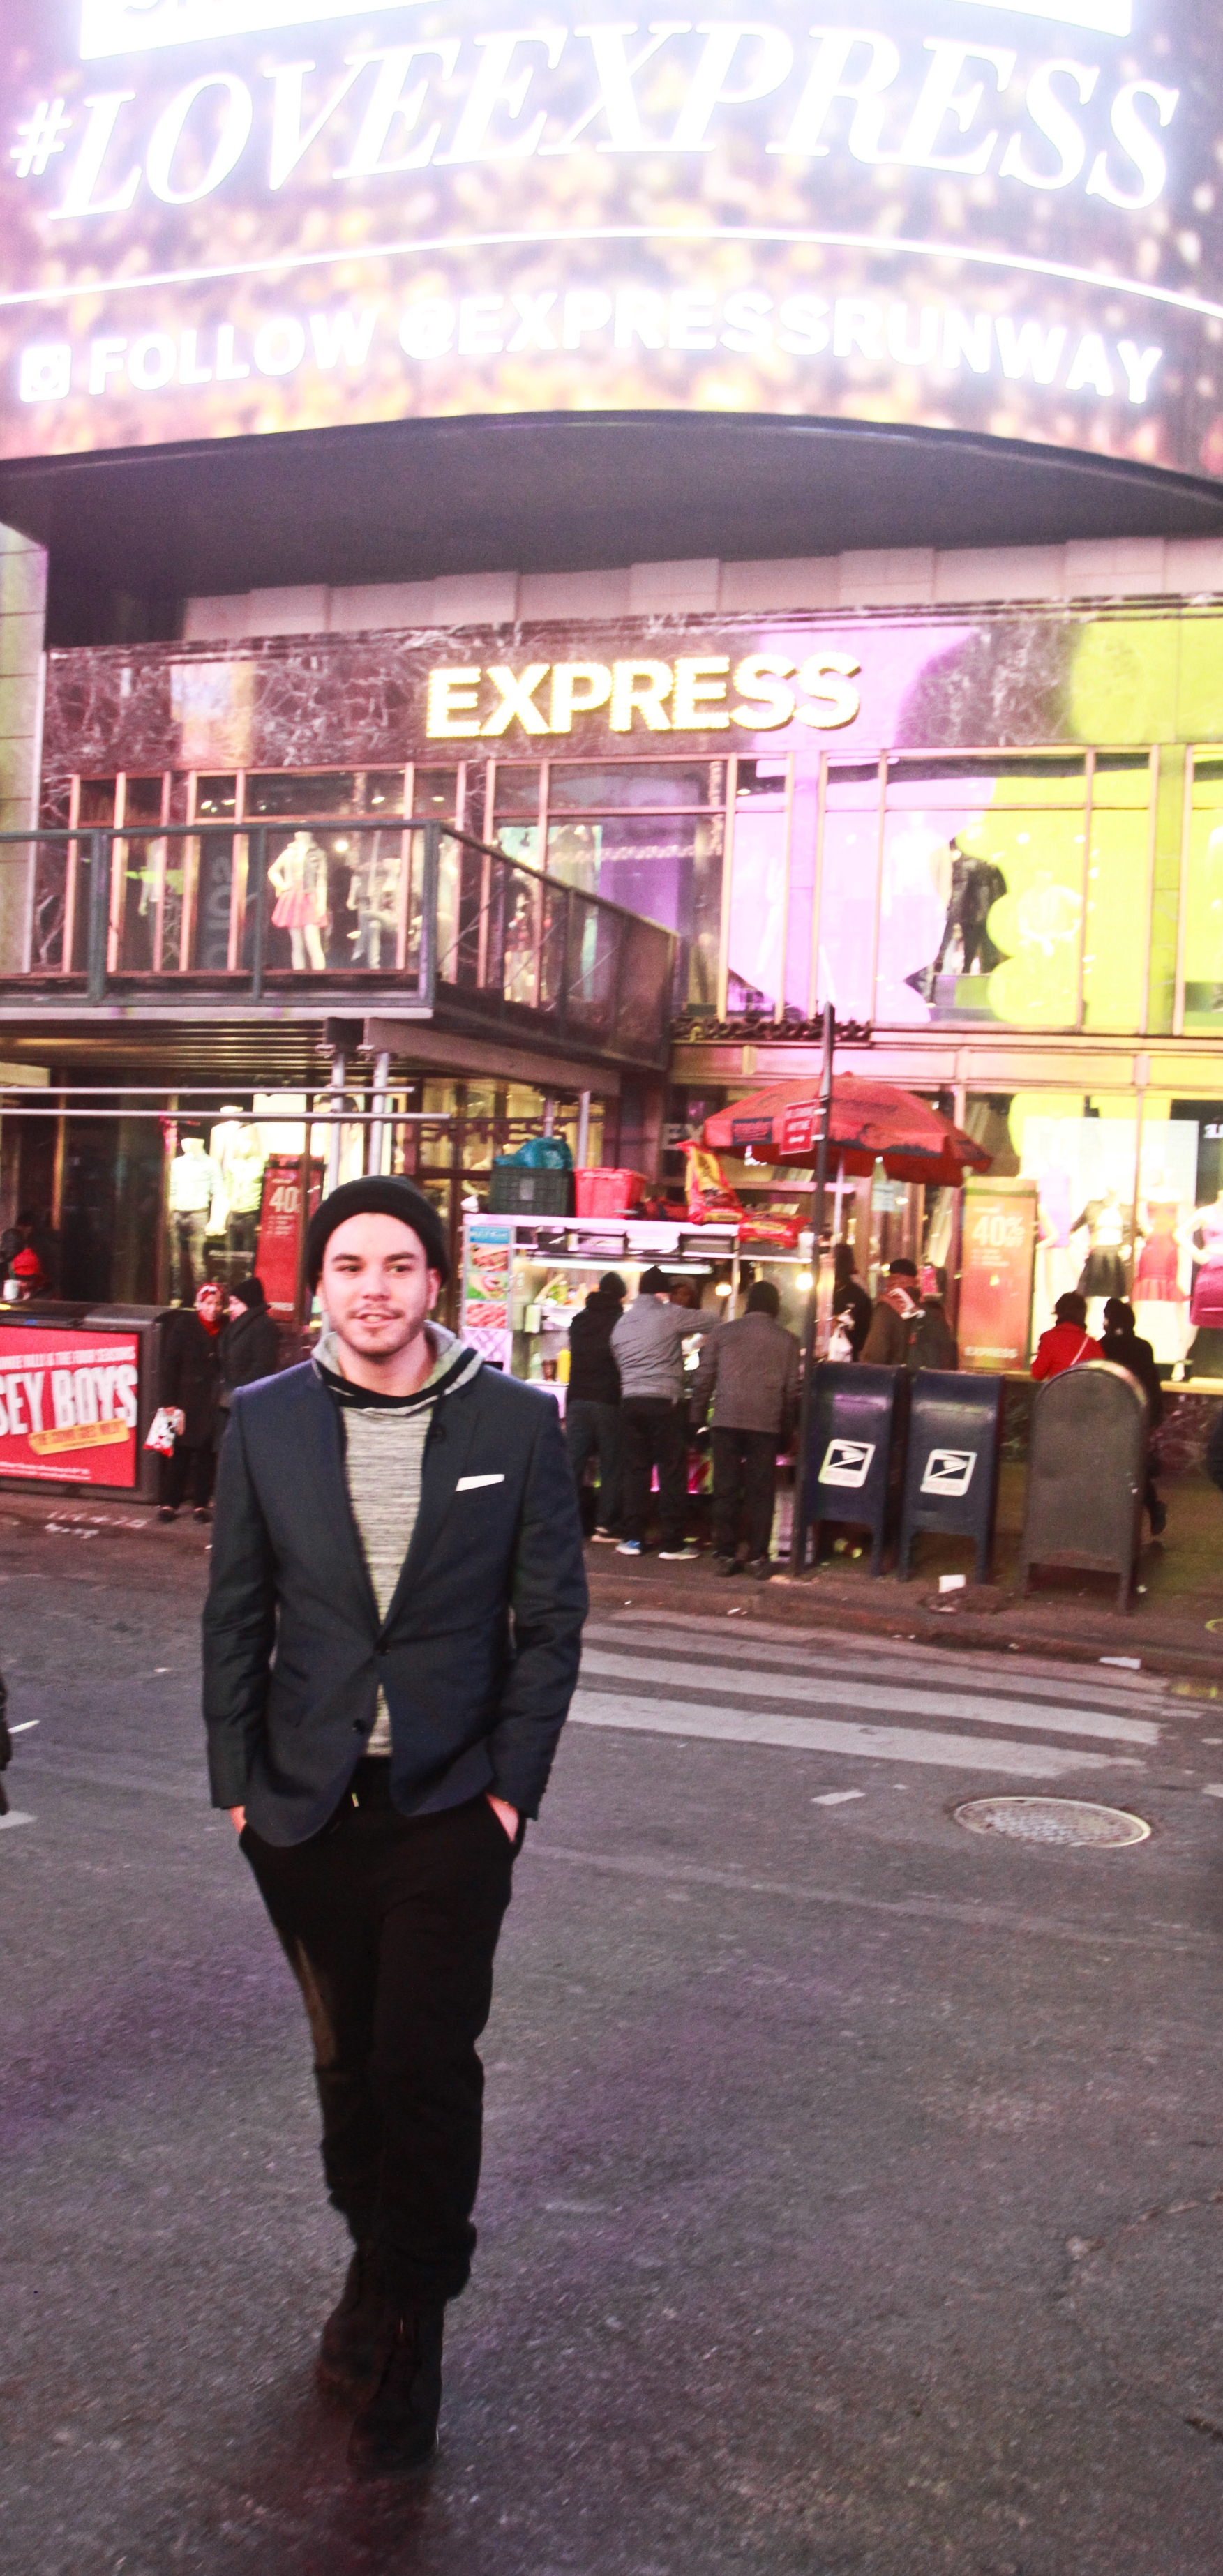 Grungy Gentleman Times Square NYC billboard 3.JPG